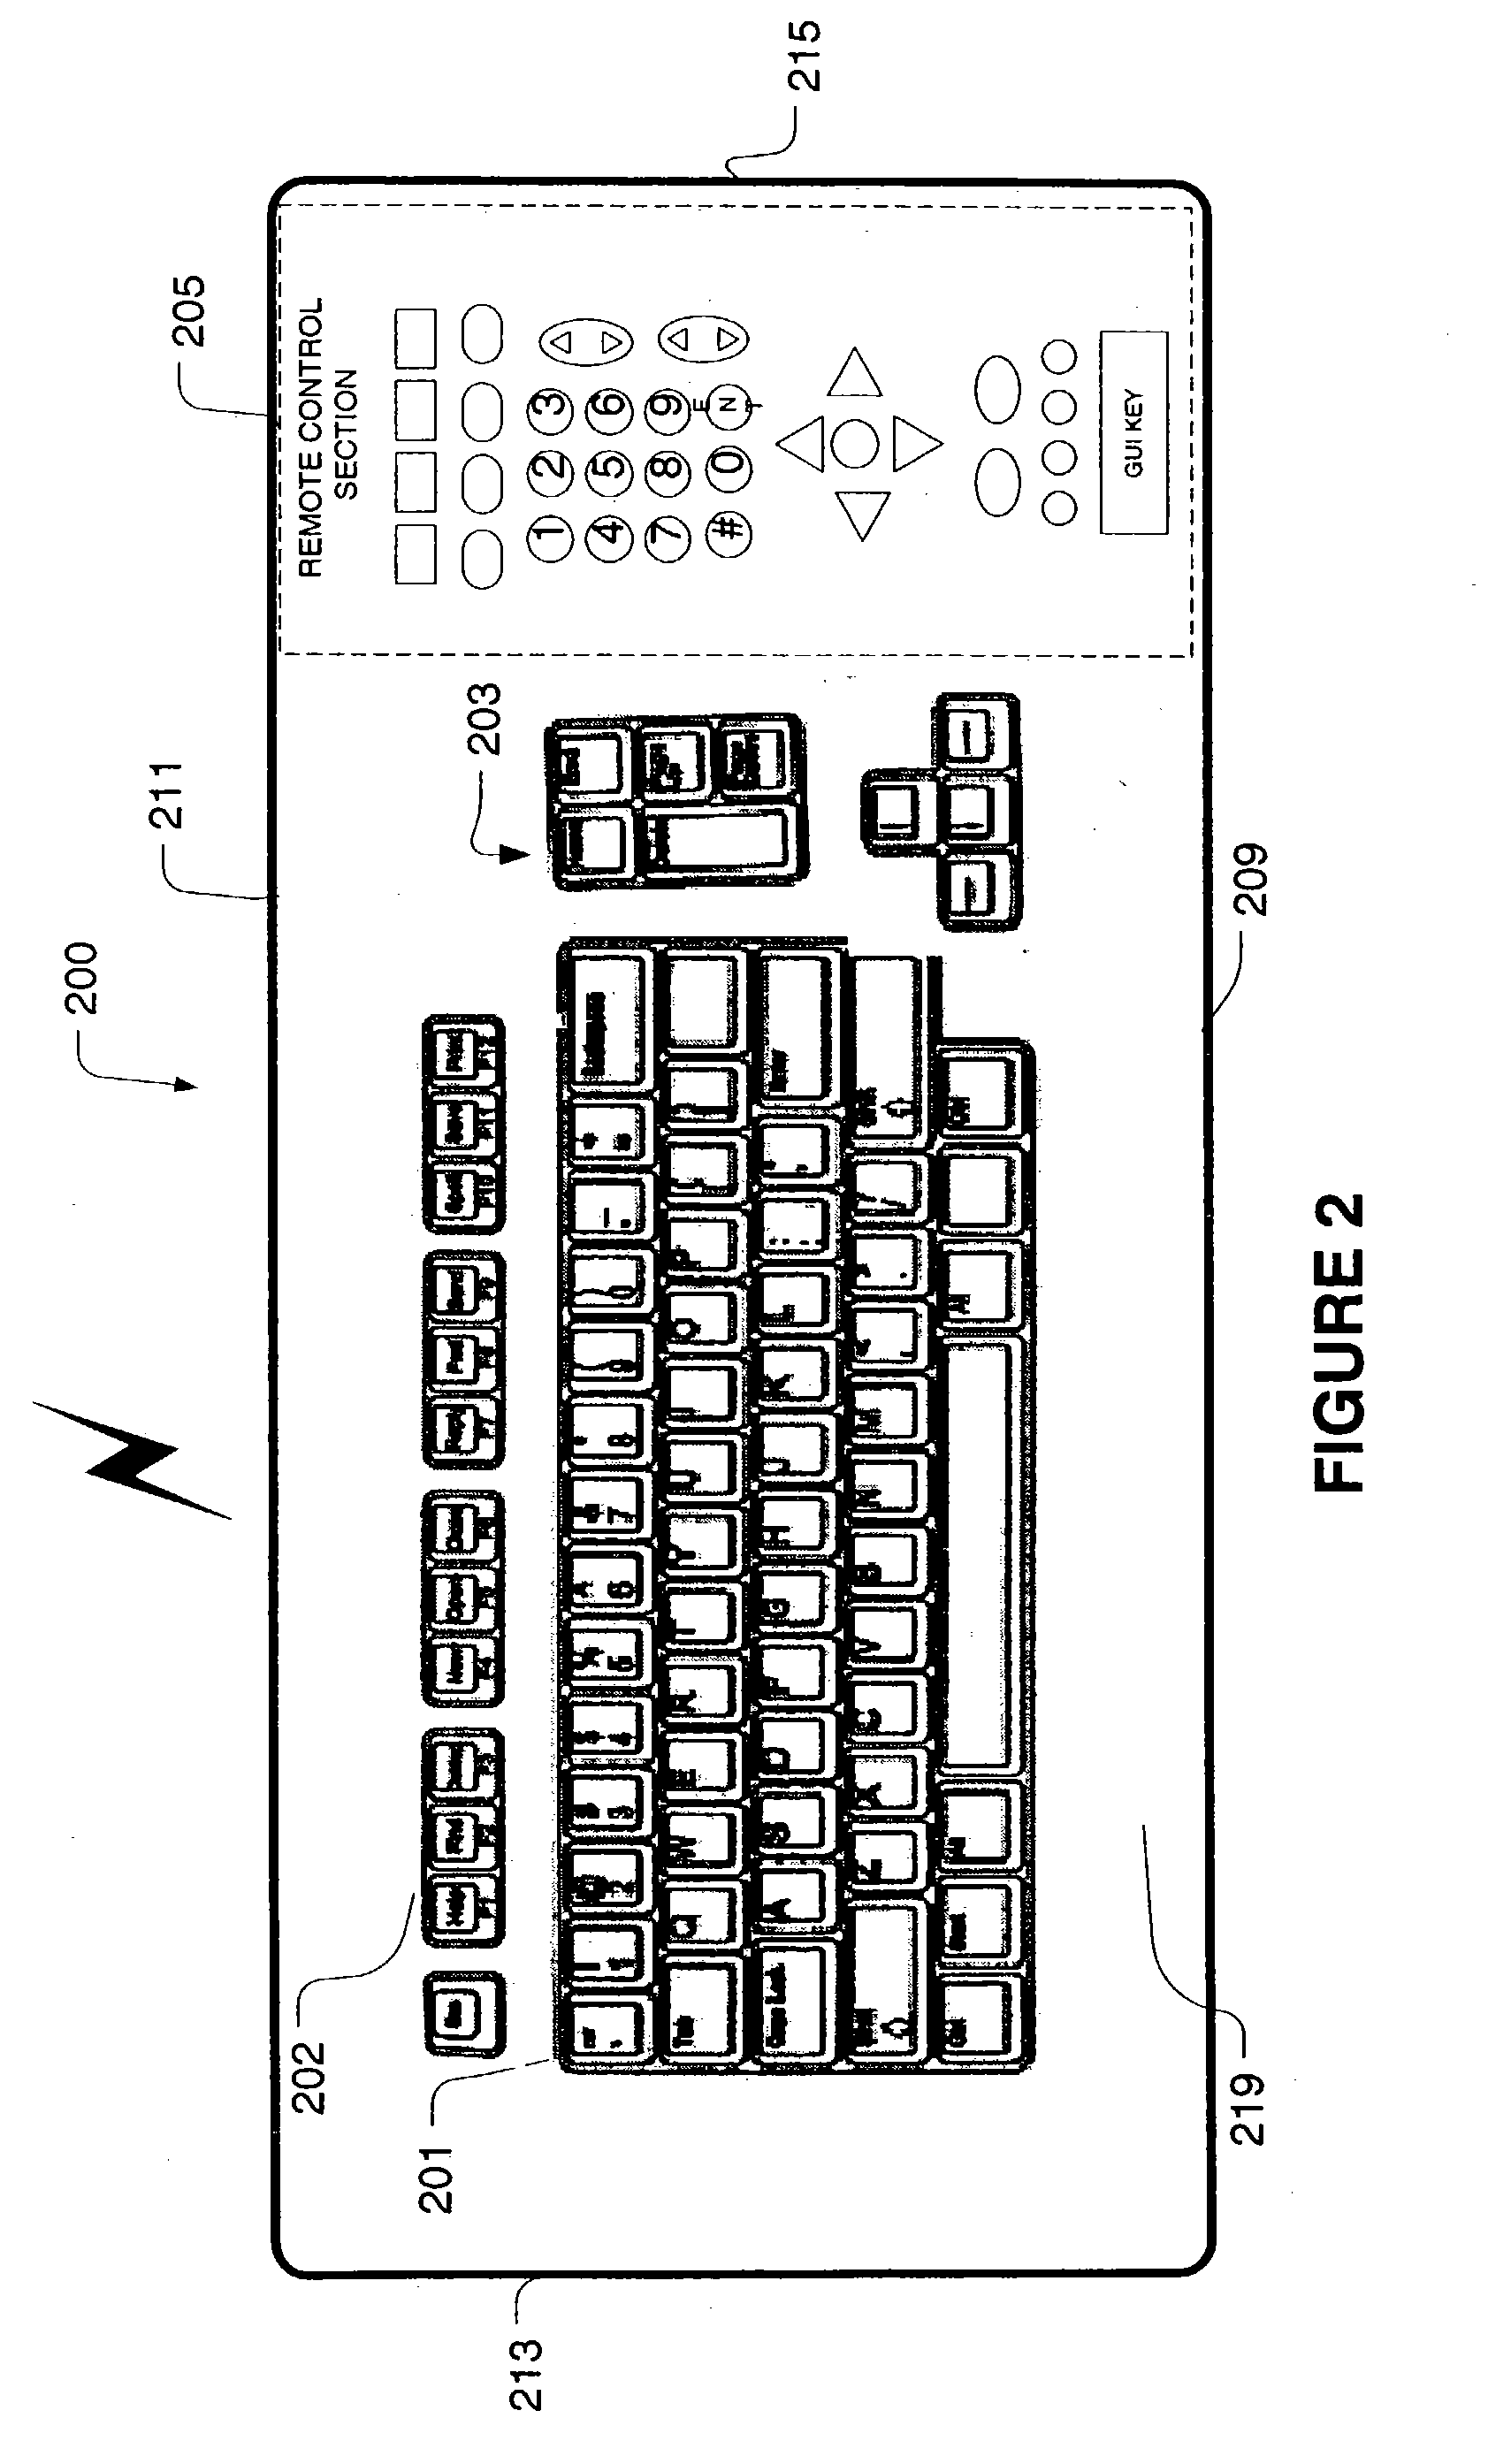 Universal remote computer keyboard